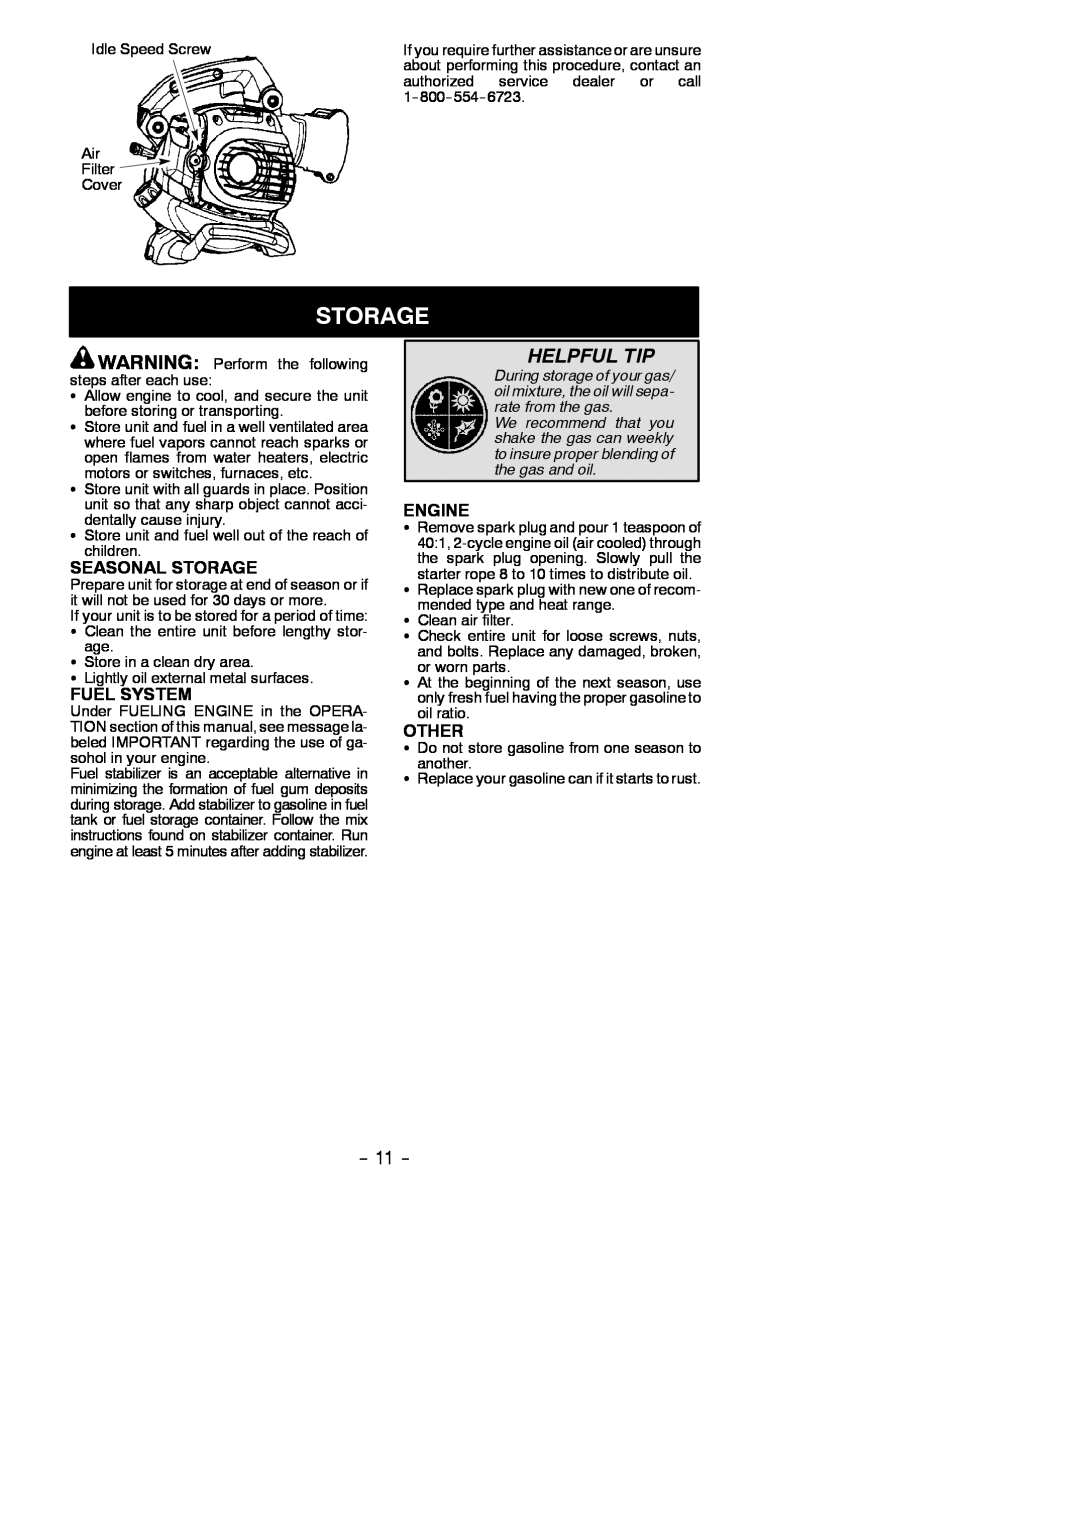 Poulan BVM210VS instruction manual Helpful Tip, Seasonal Storage, Fuel System, Engine, Other 